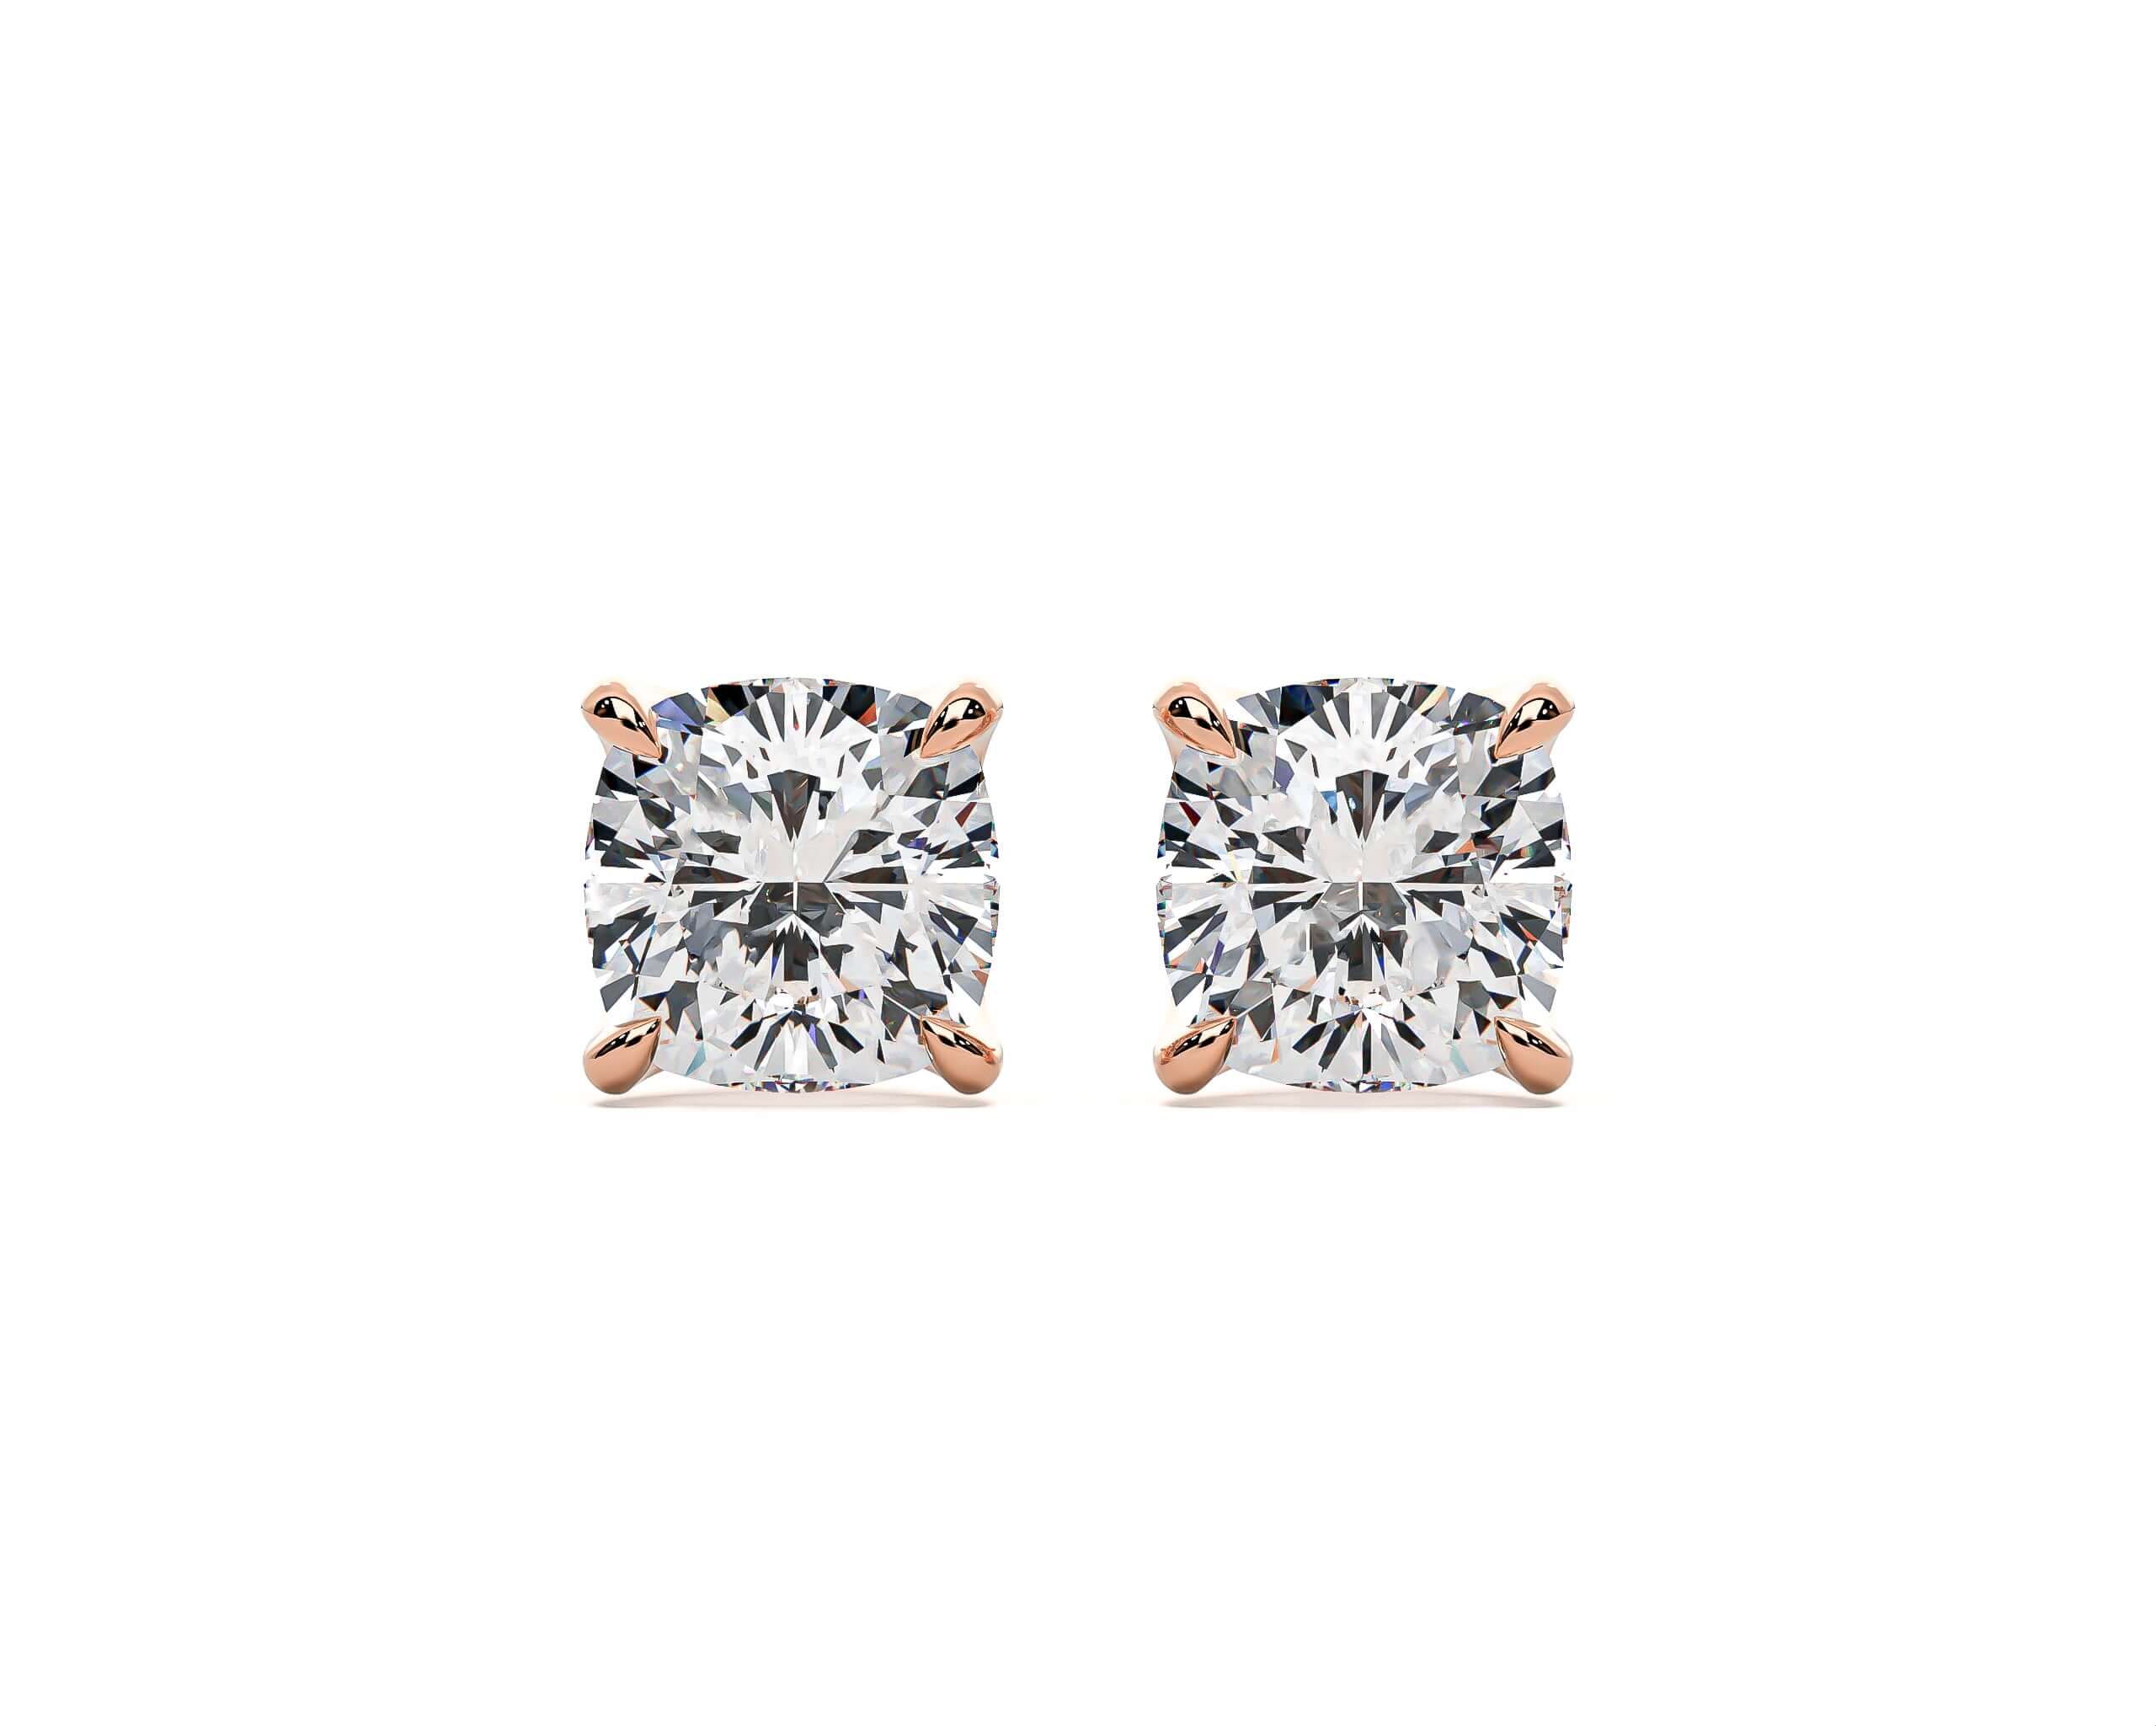 LAB LUXE - Cushion Lab grown diamond earrings